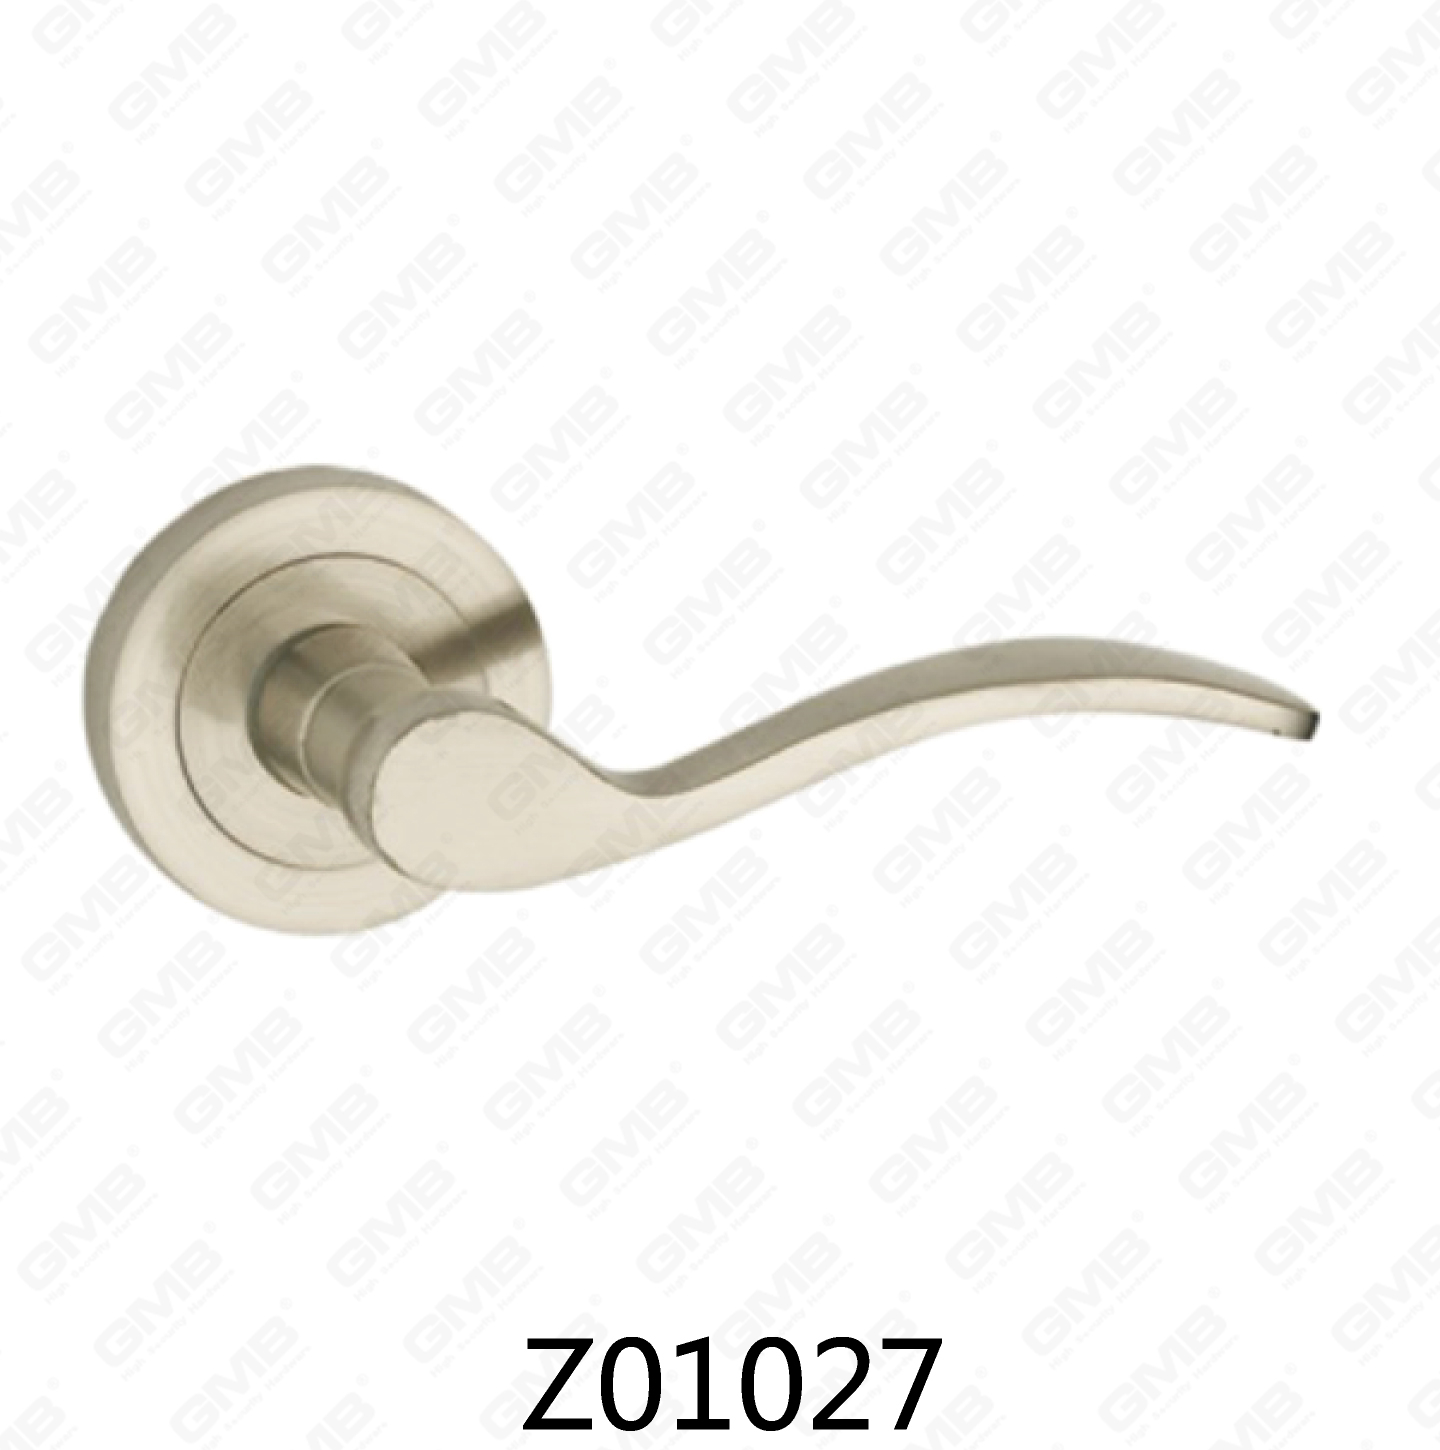 Rosetón de aluminio de aleación de zinc Zamak Manija de puerta con roseta redonda (Z01027)